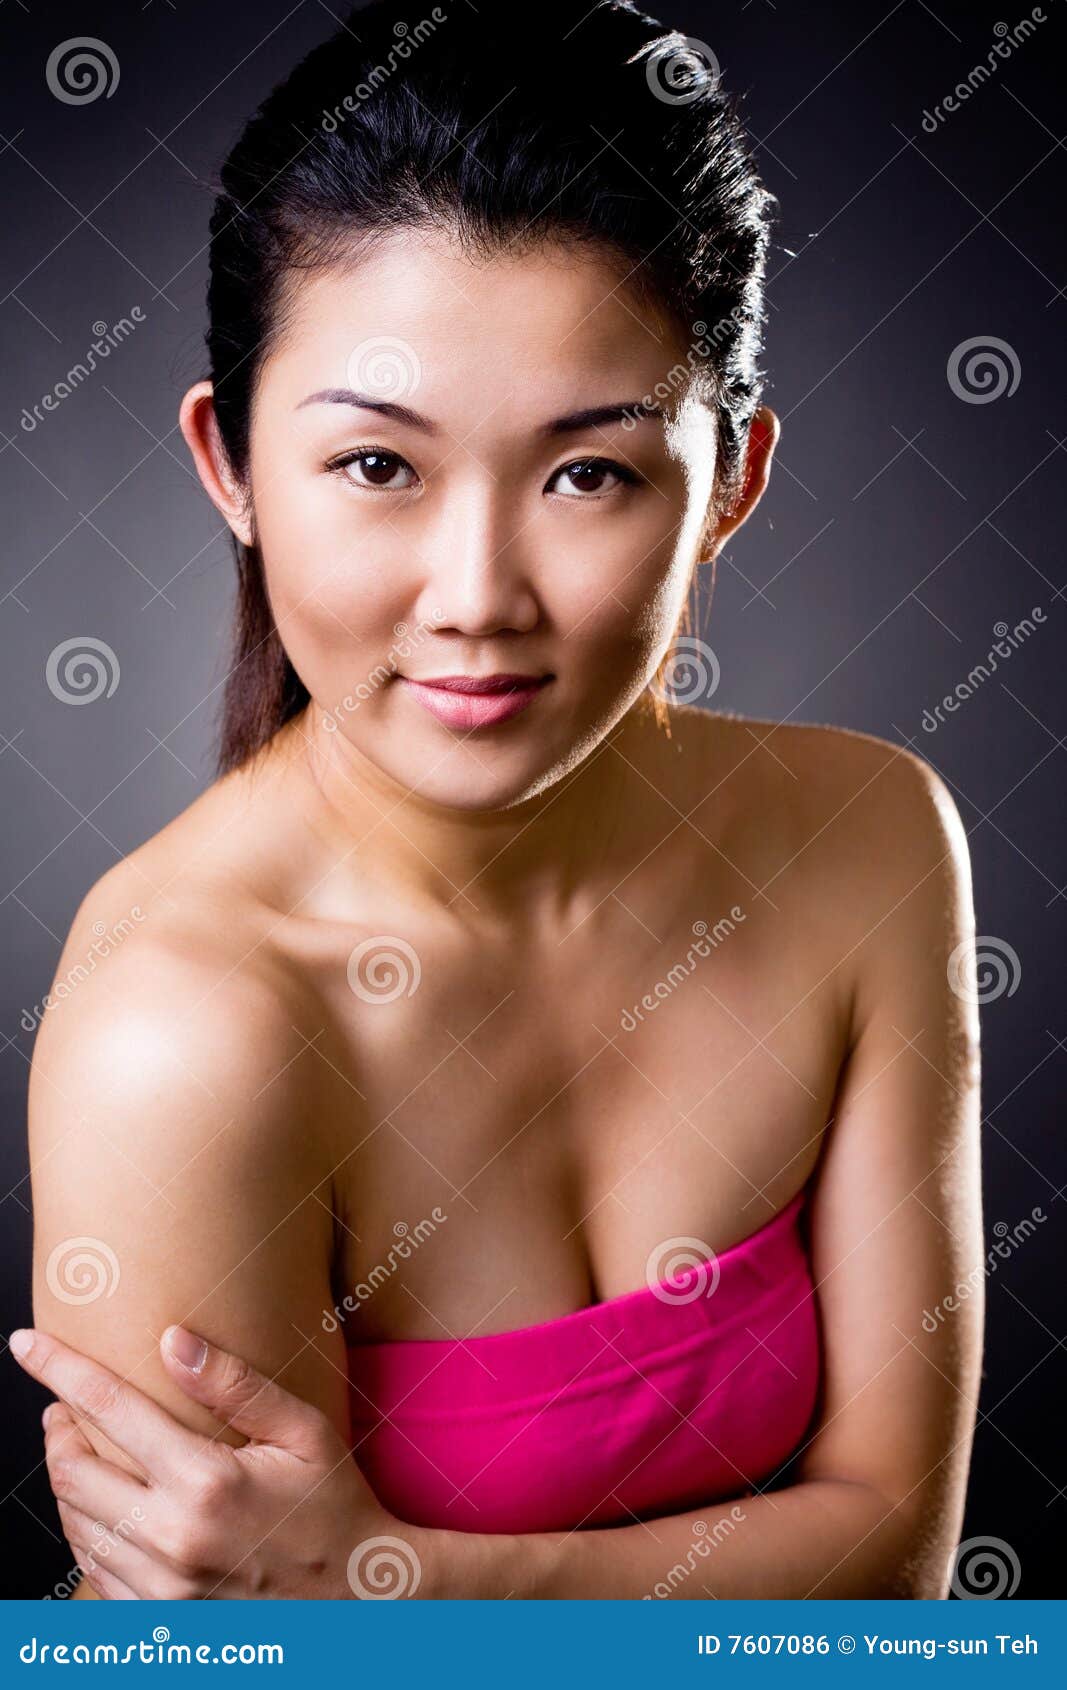 https://thumbs.dreamstime.com/z/beautiful-smile-asian-woman-7607086.jpg